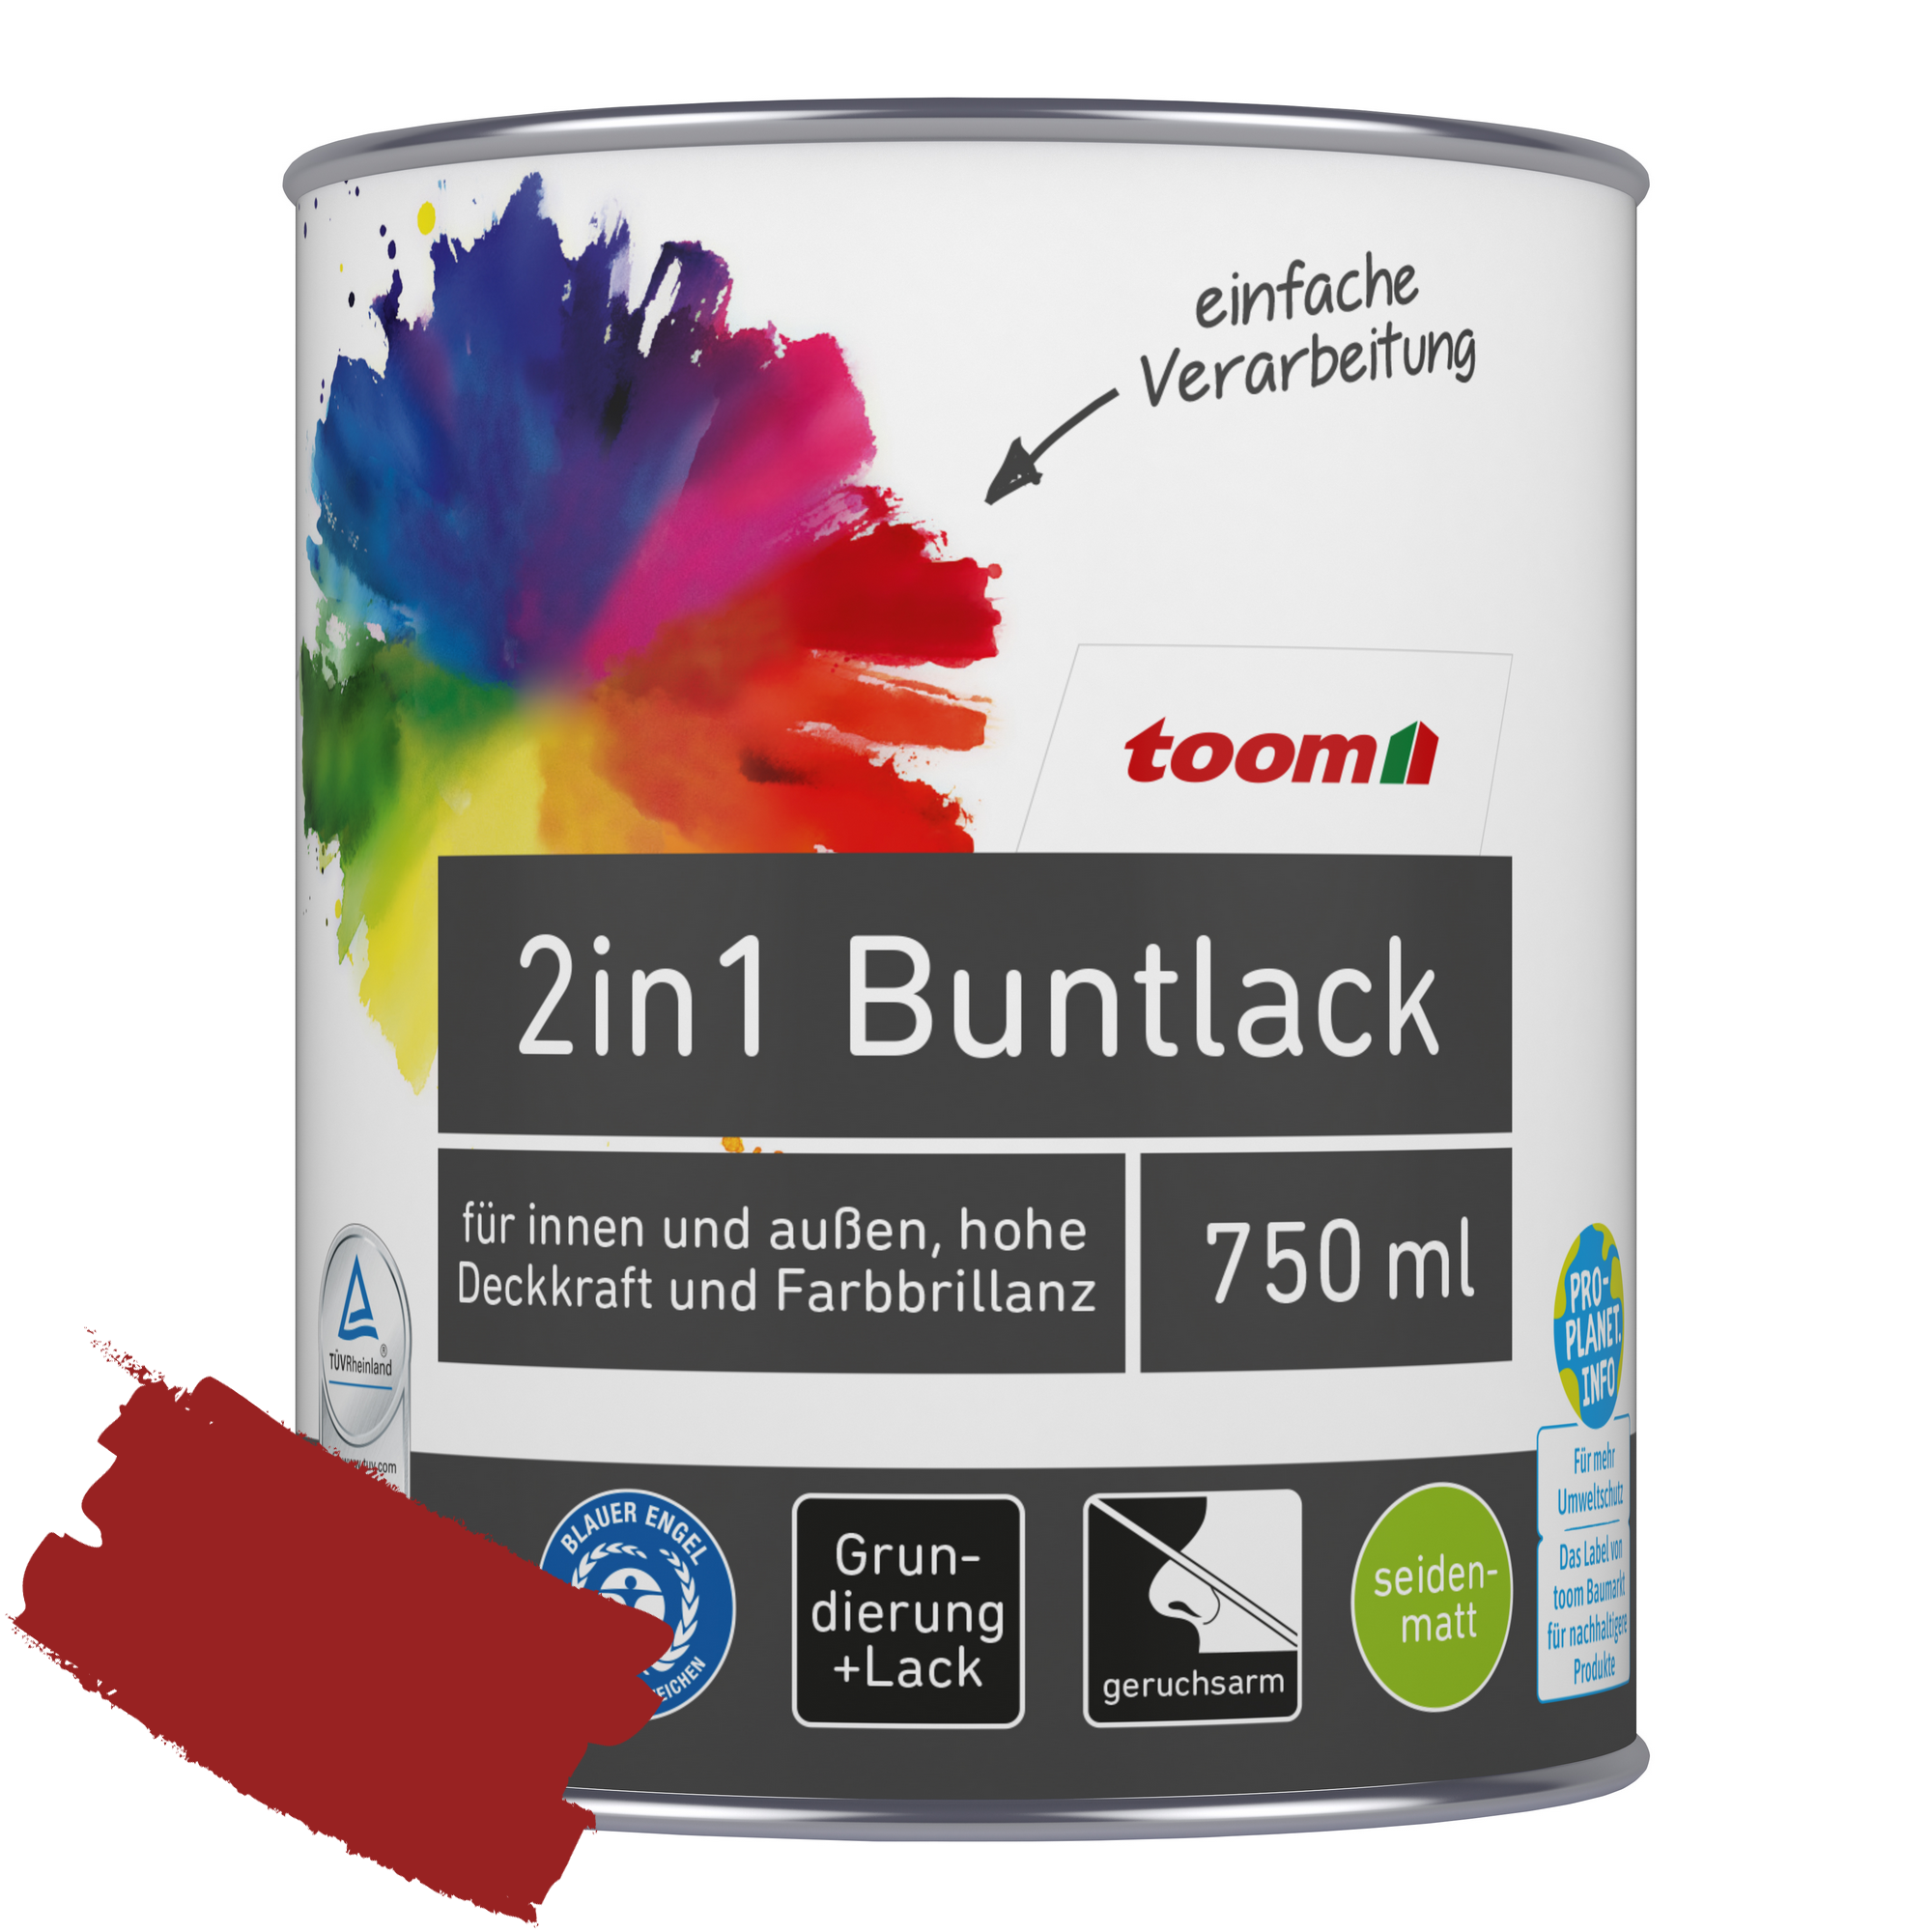 2in1 Buntlack 'Mohnblume' feuerrot seidenmatt 750 ml + product picture